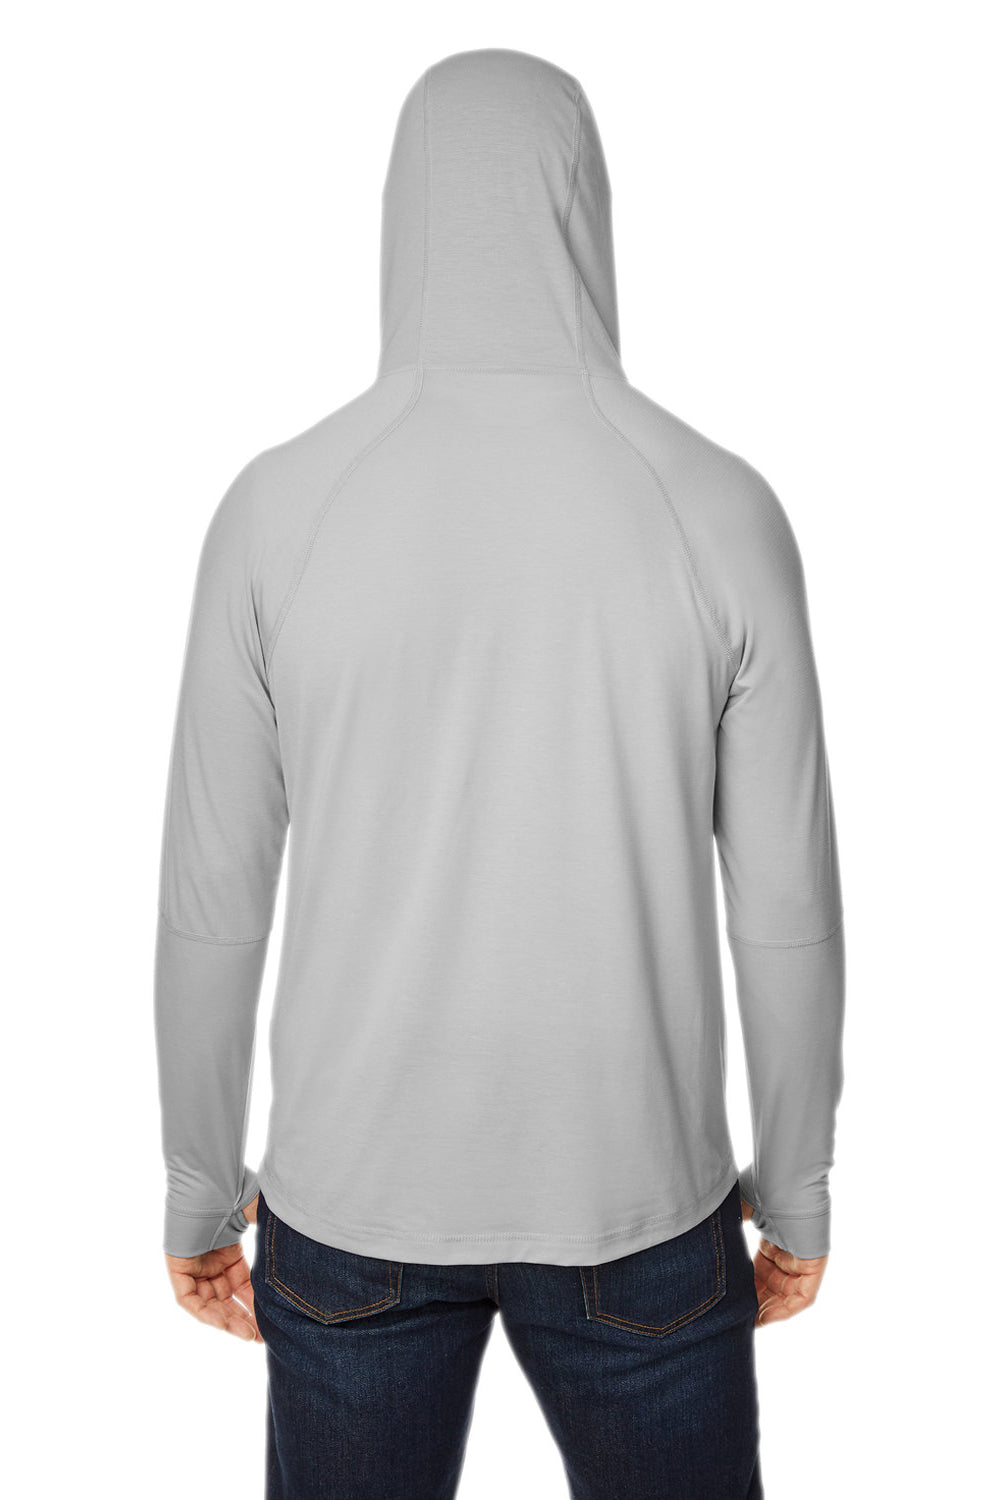 North End NE105 Mens Jaq Stretch Performance Hooded T-Shirt Hoodie Platinum Grey Back